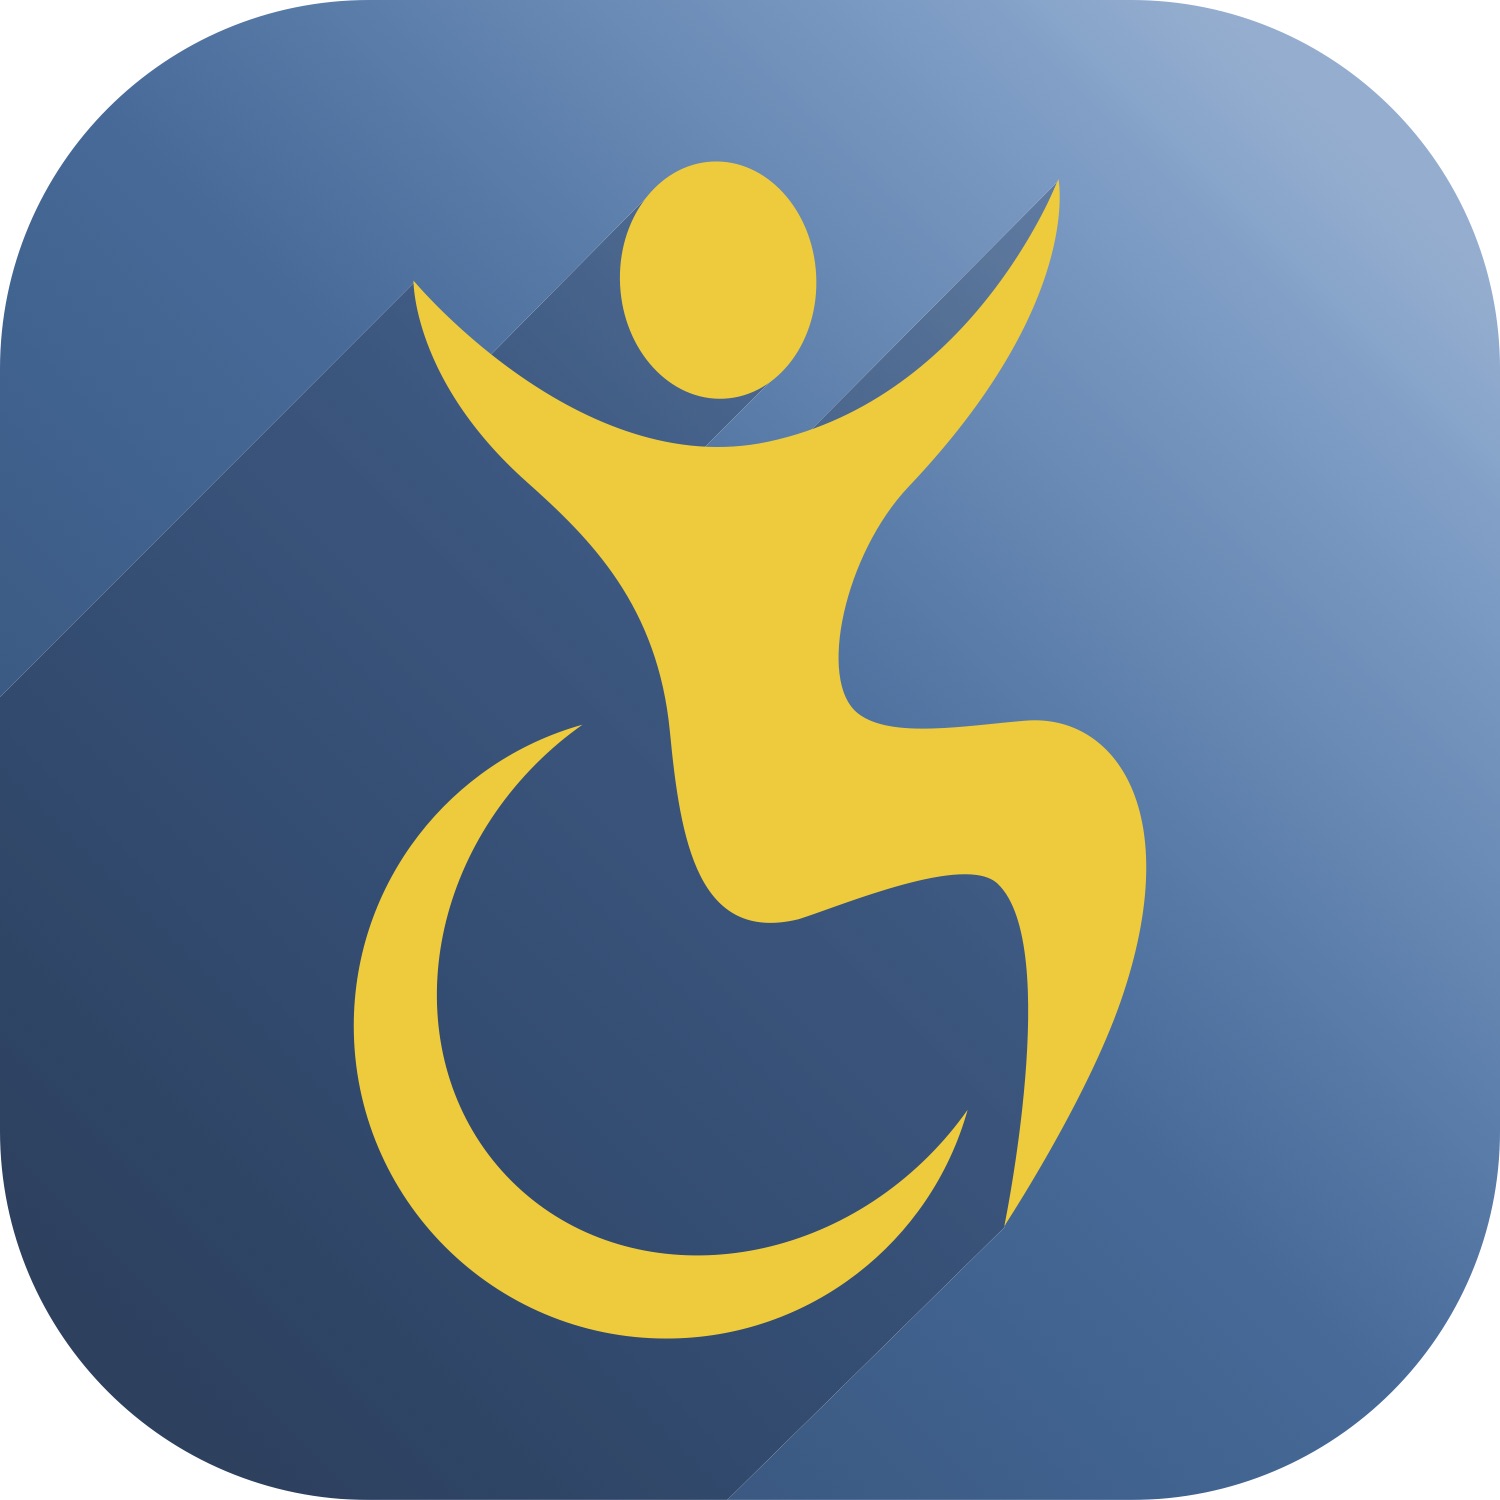 Disability logo icon